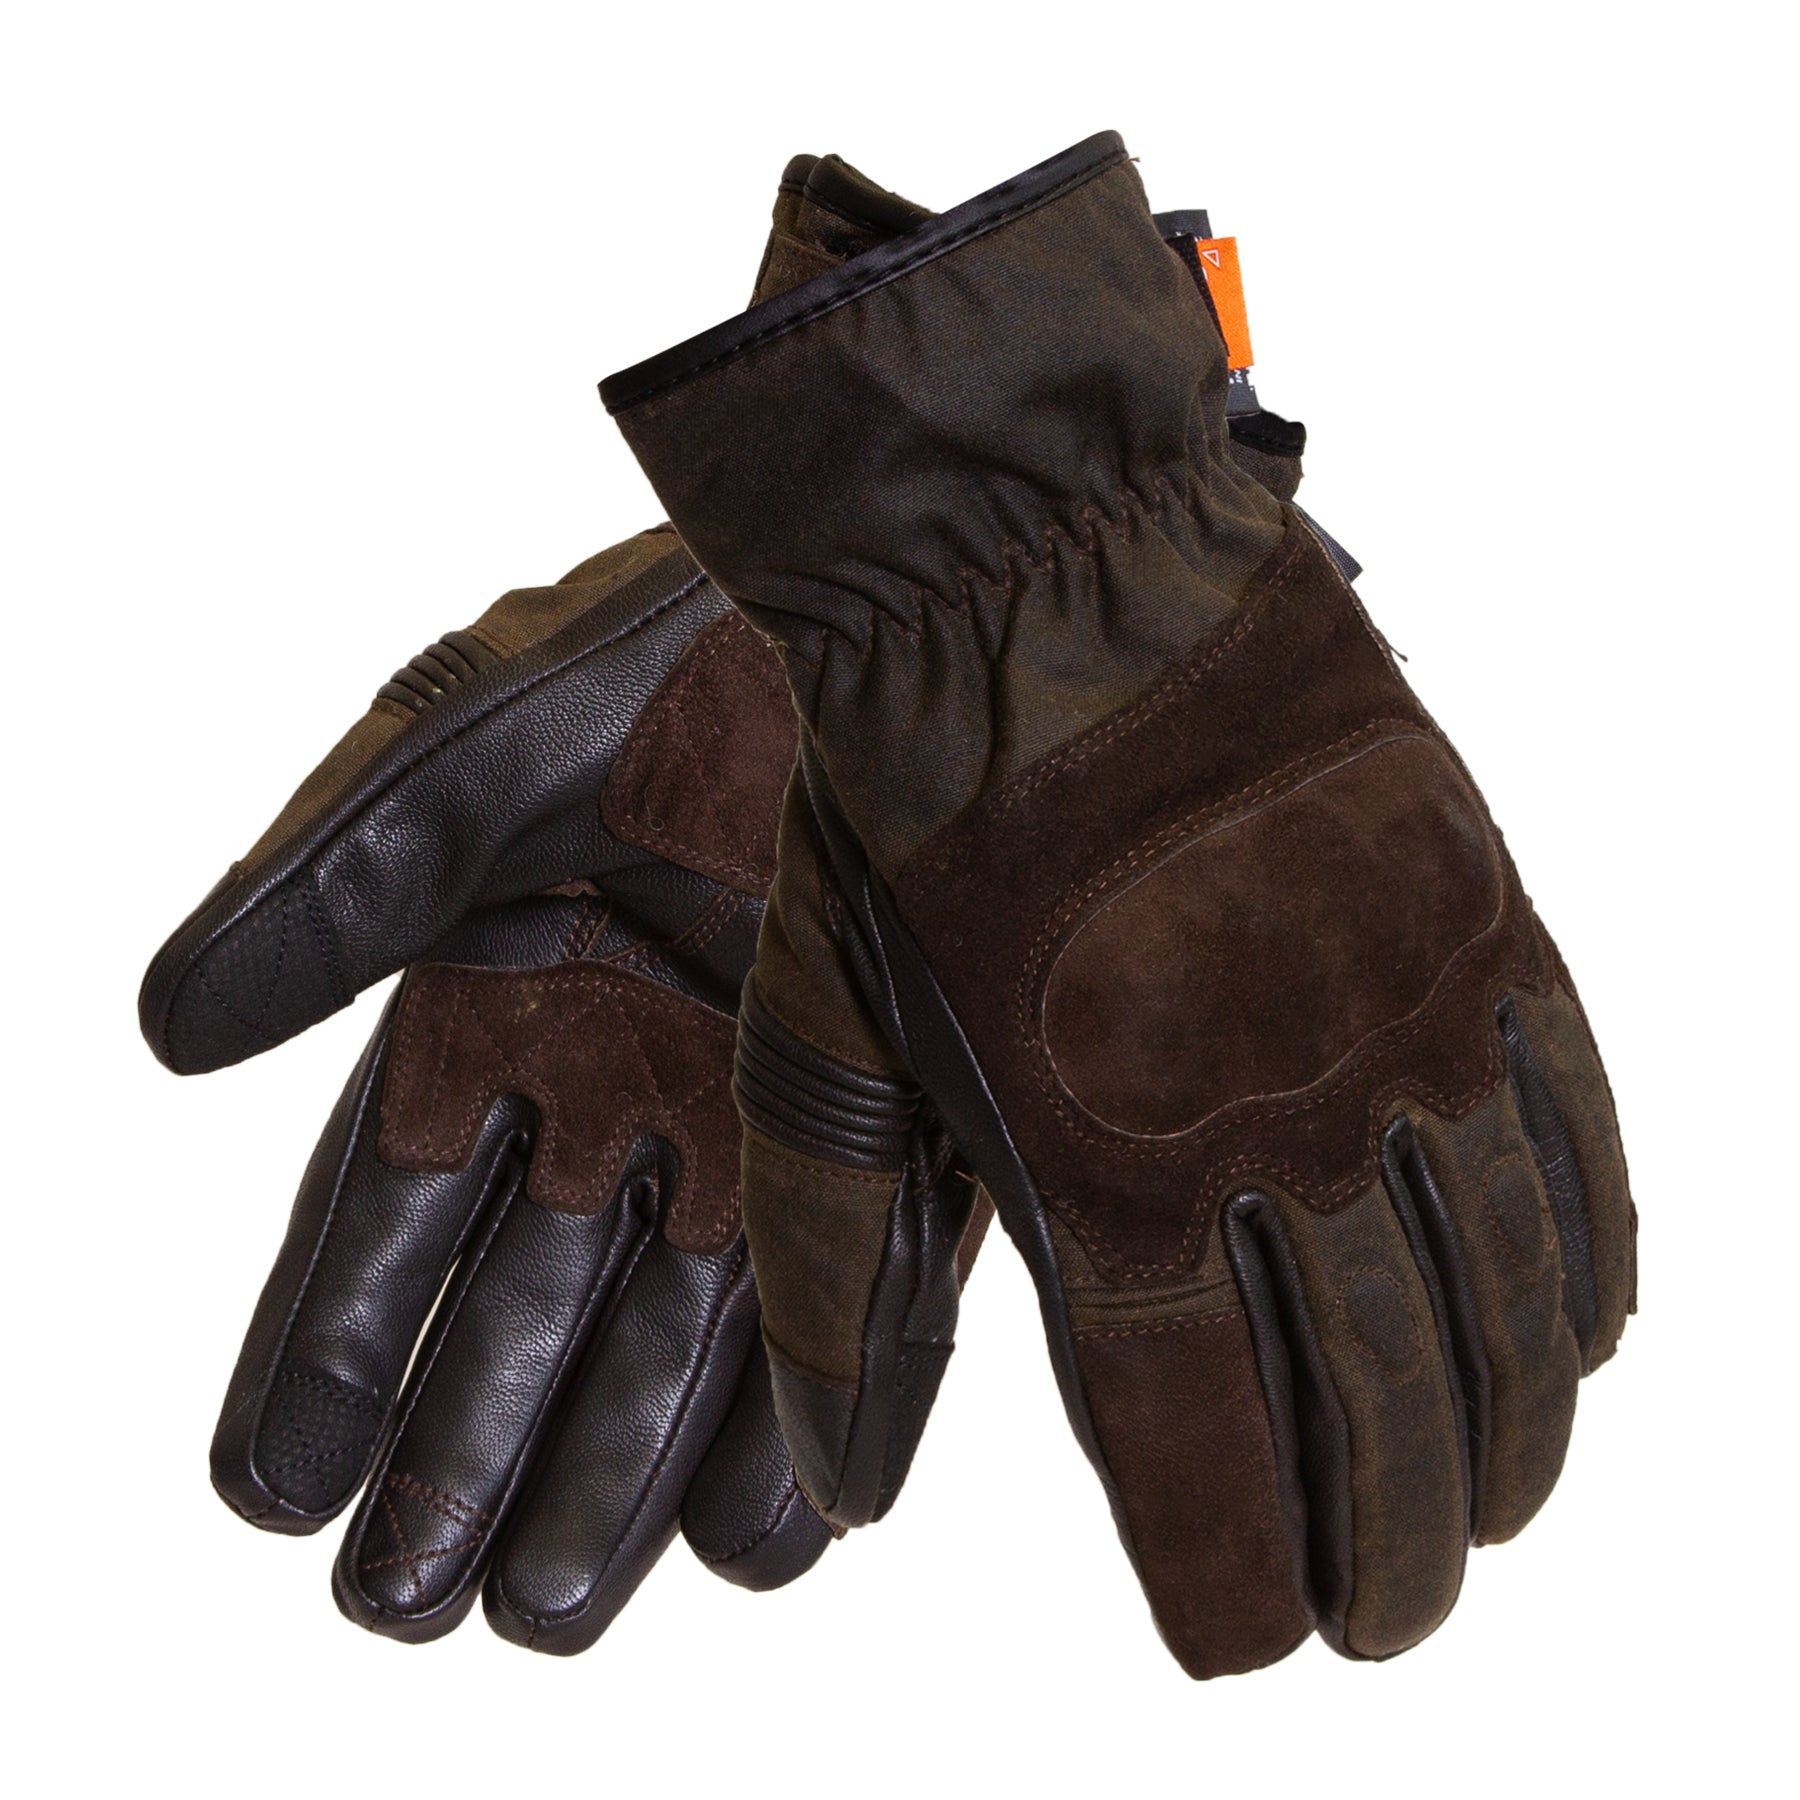 Ranton II D3O® Glove